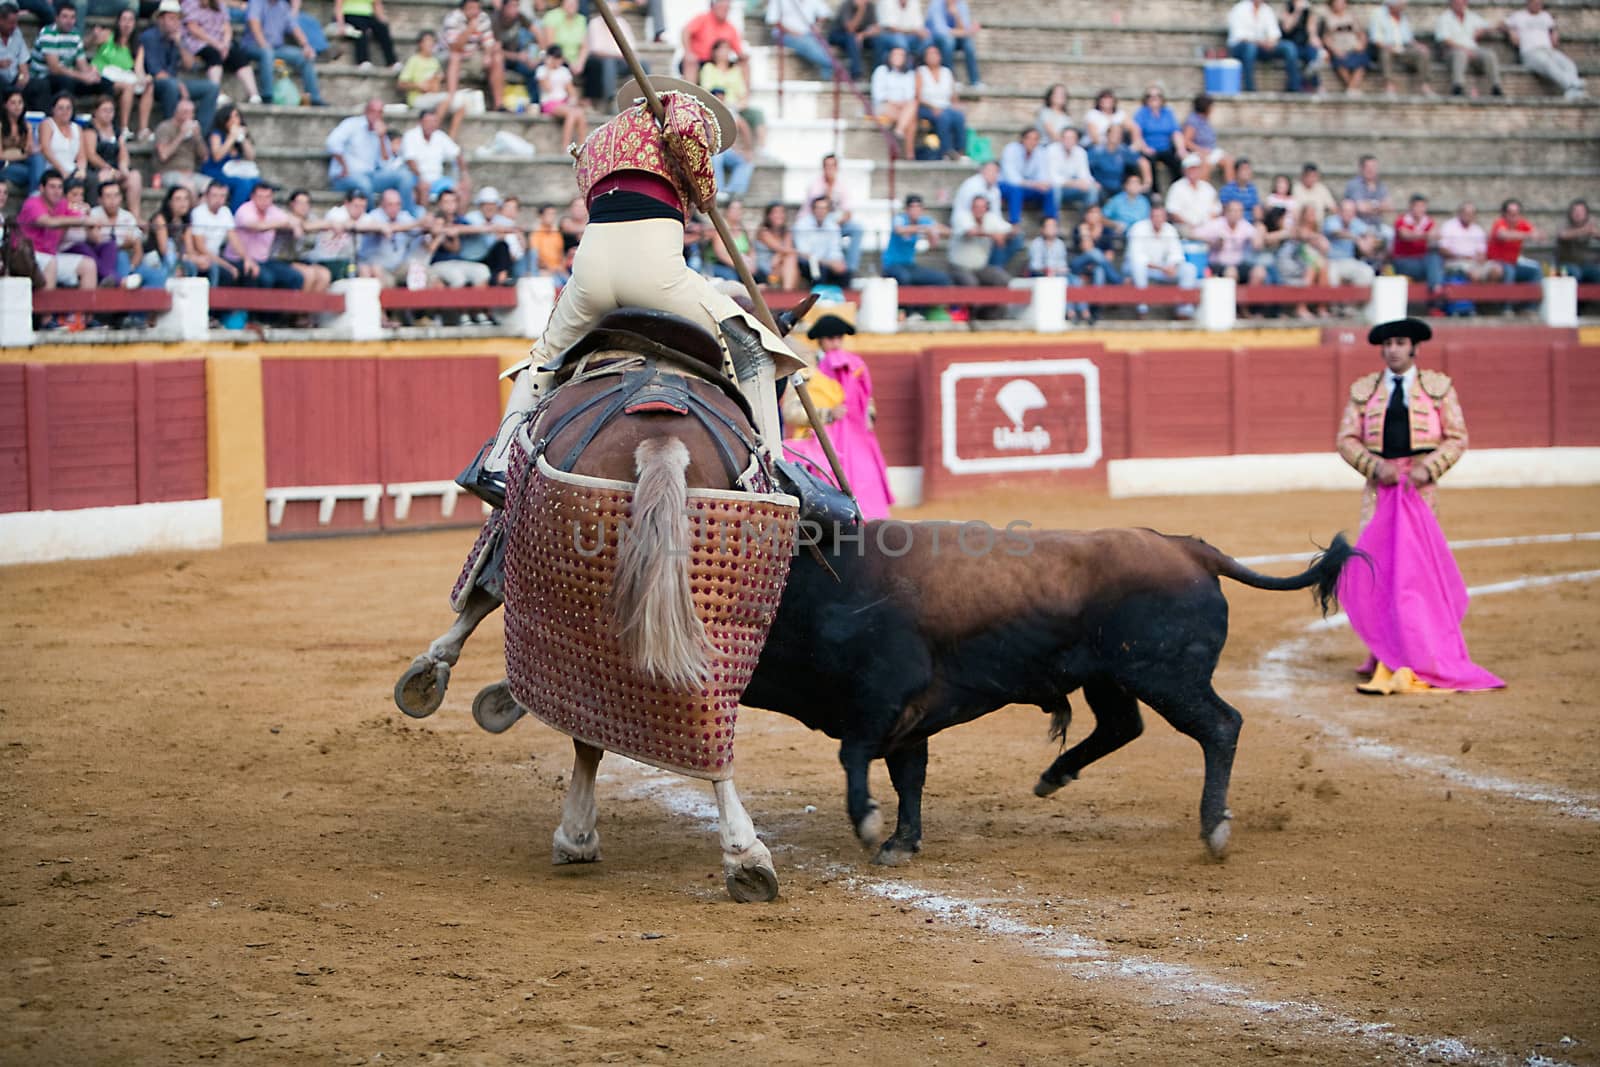 Picador bullfighter, Spain by digicomphoto